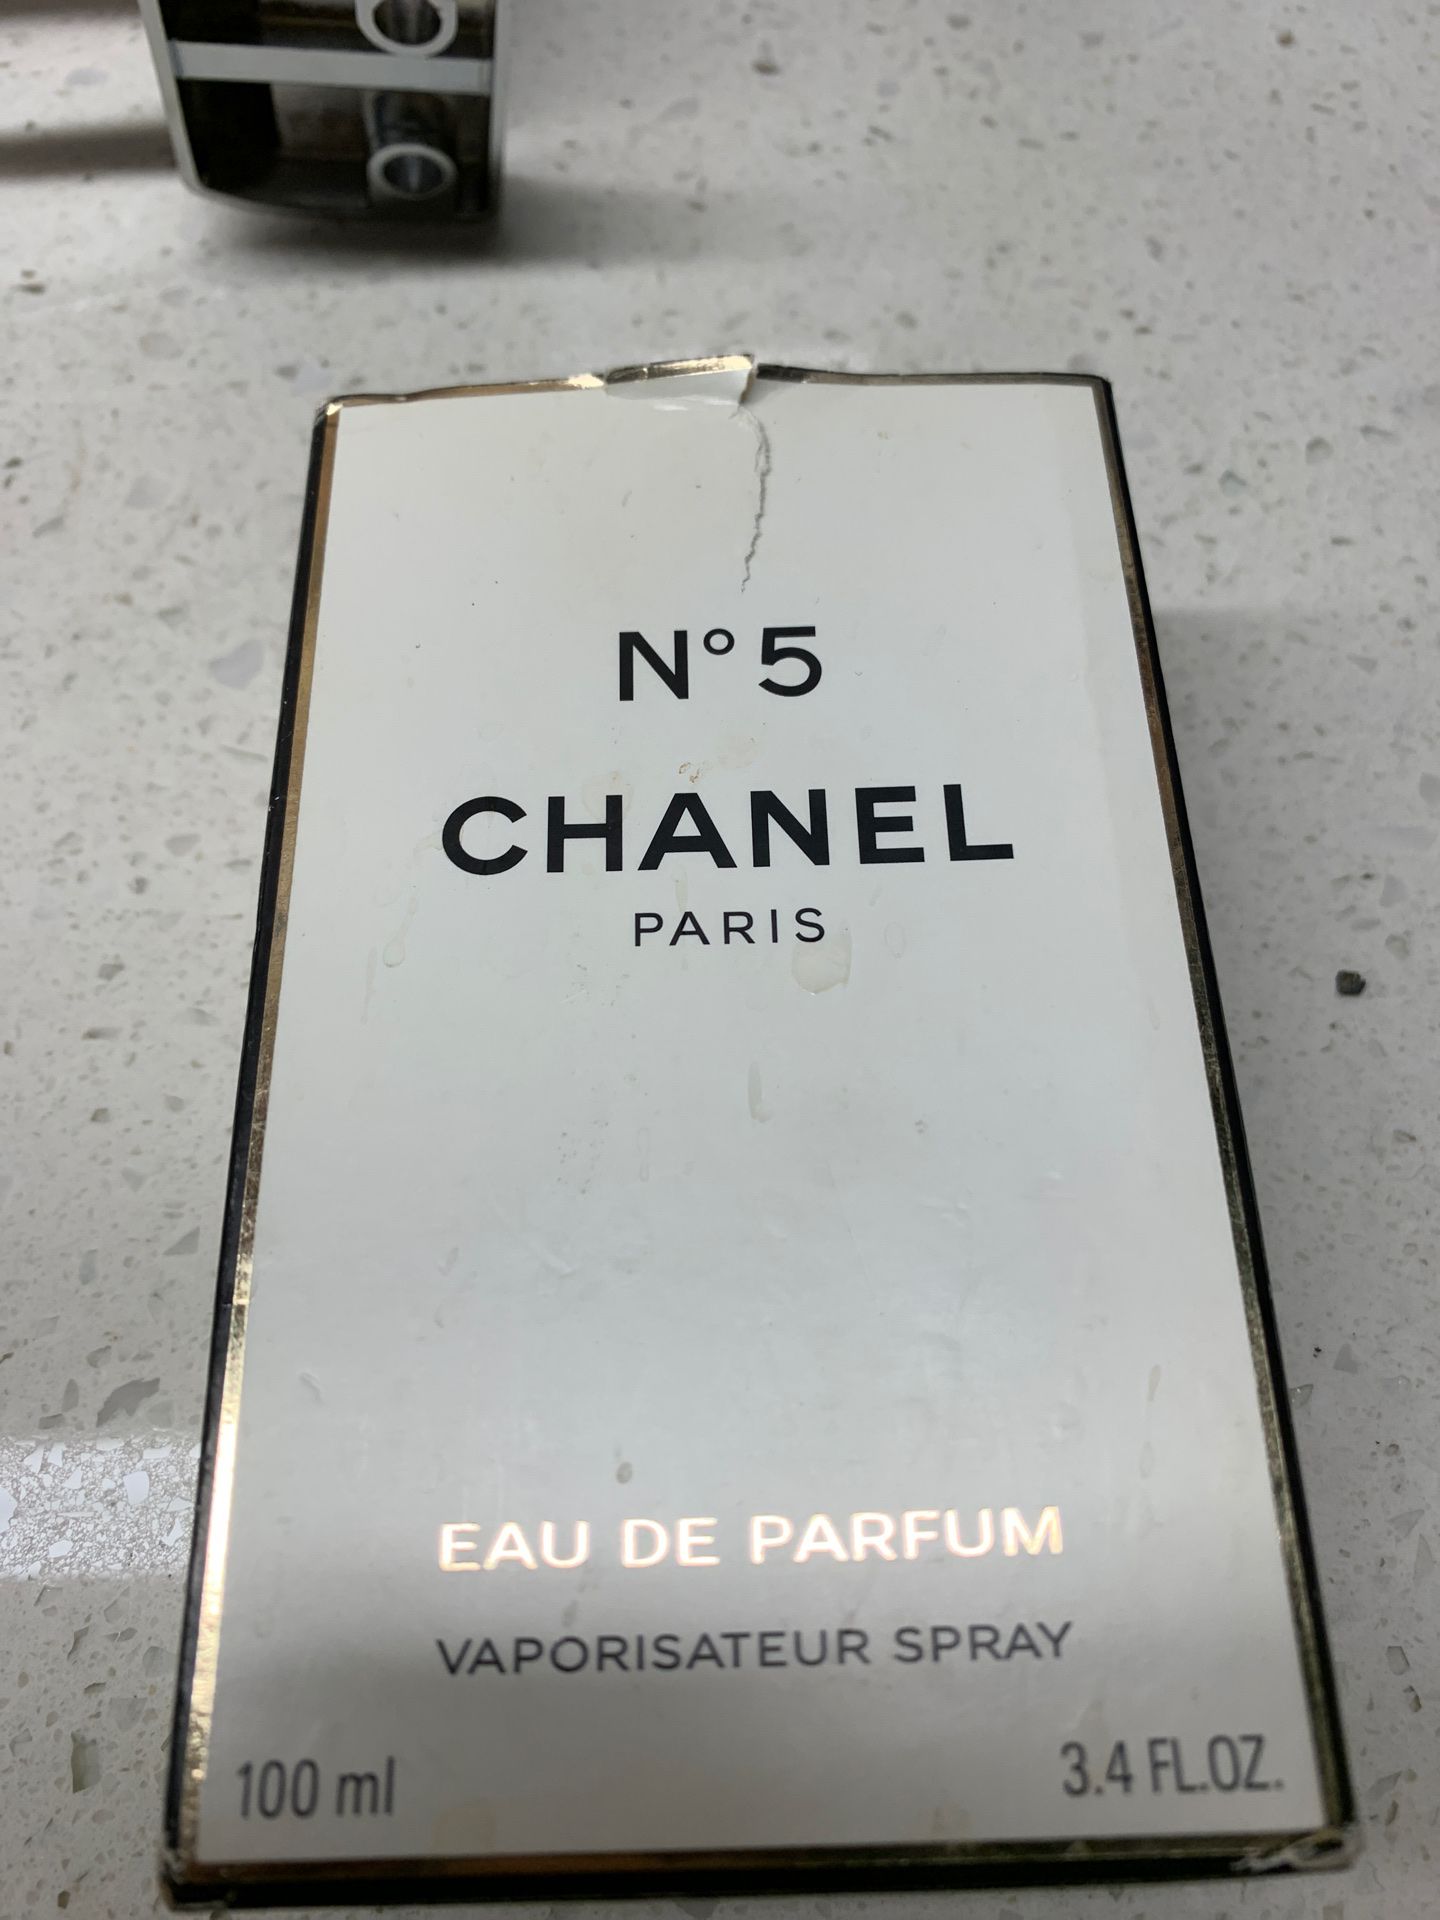 CHANEL NO. 5 Paris perfume